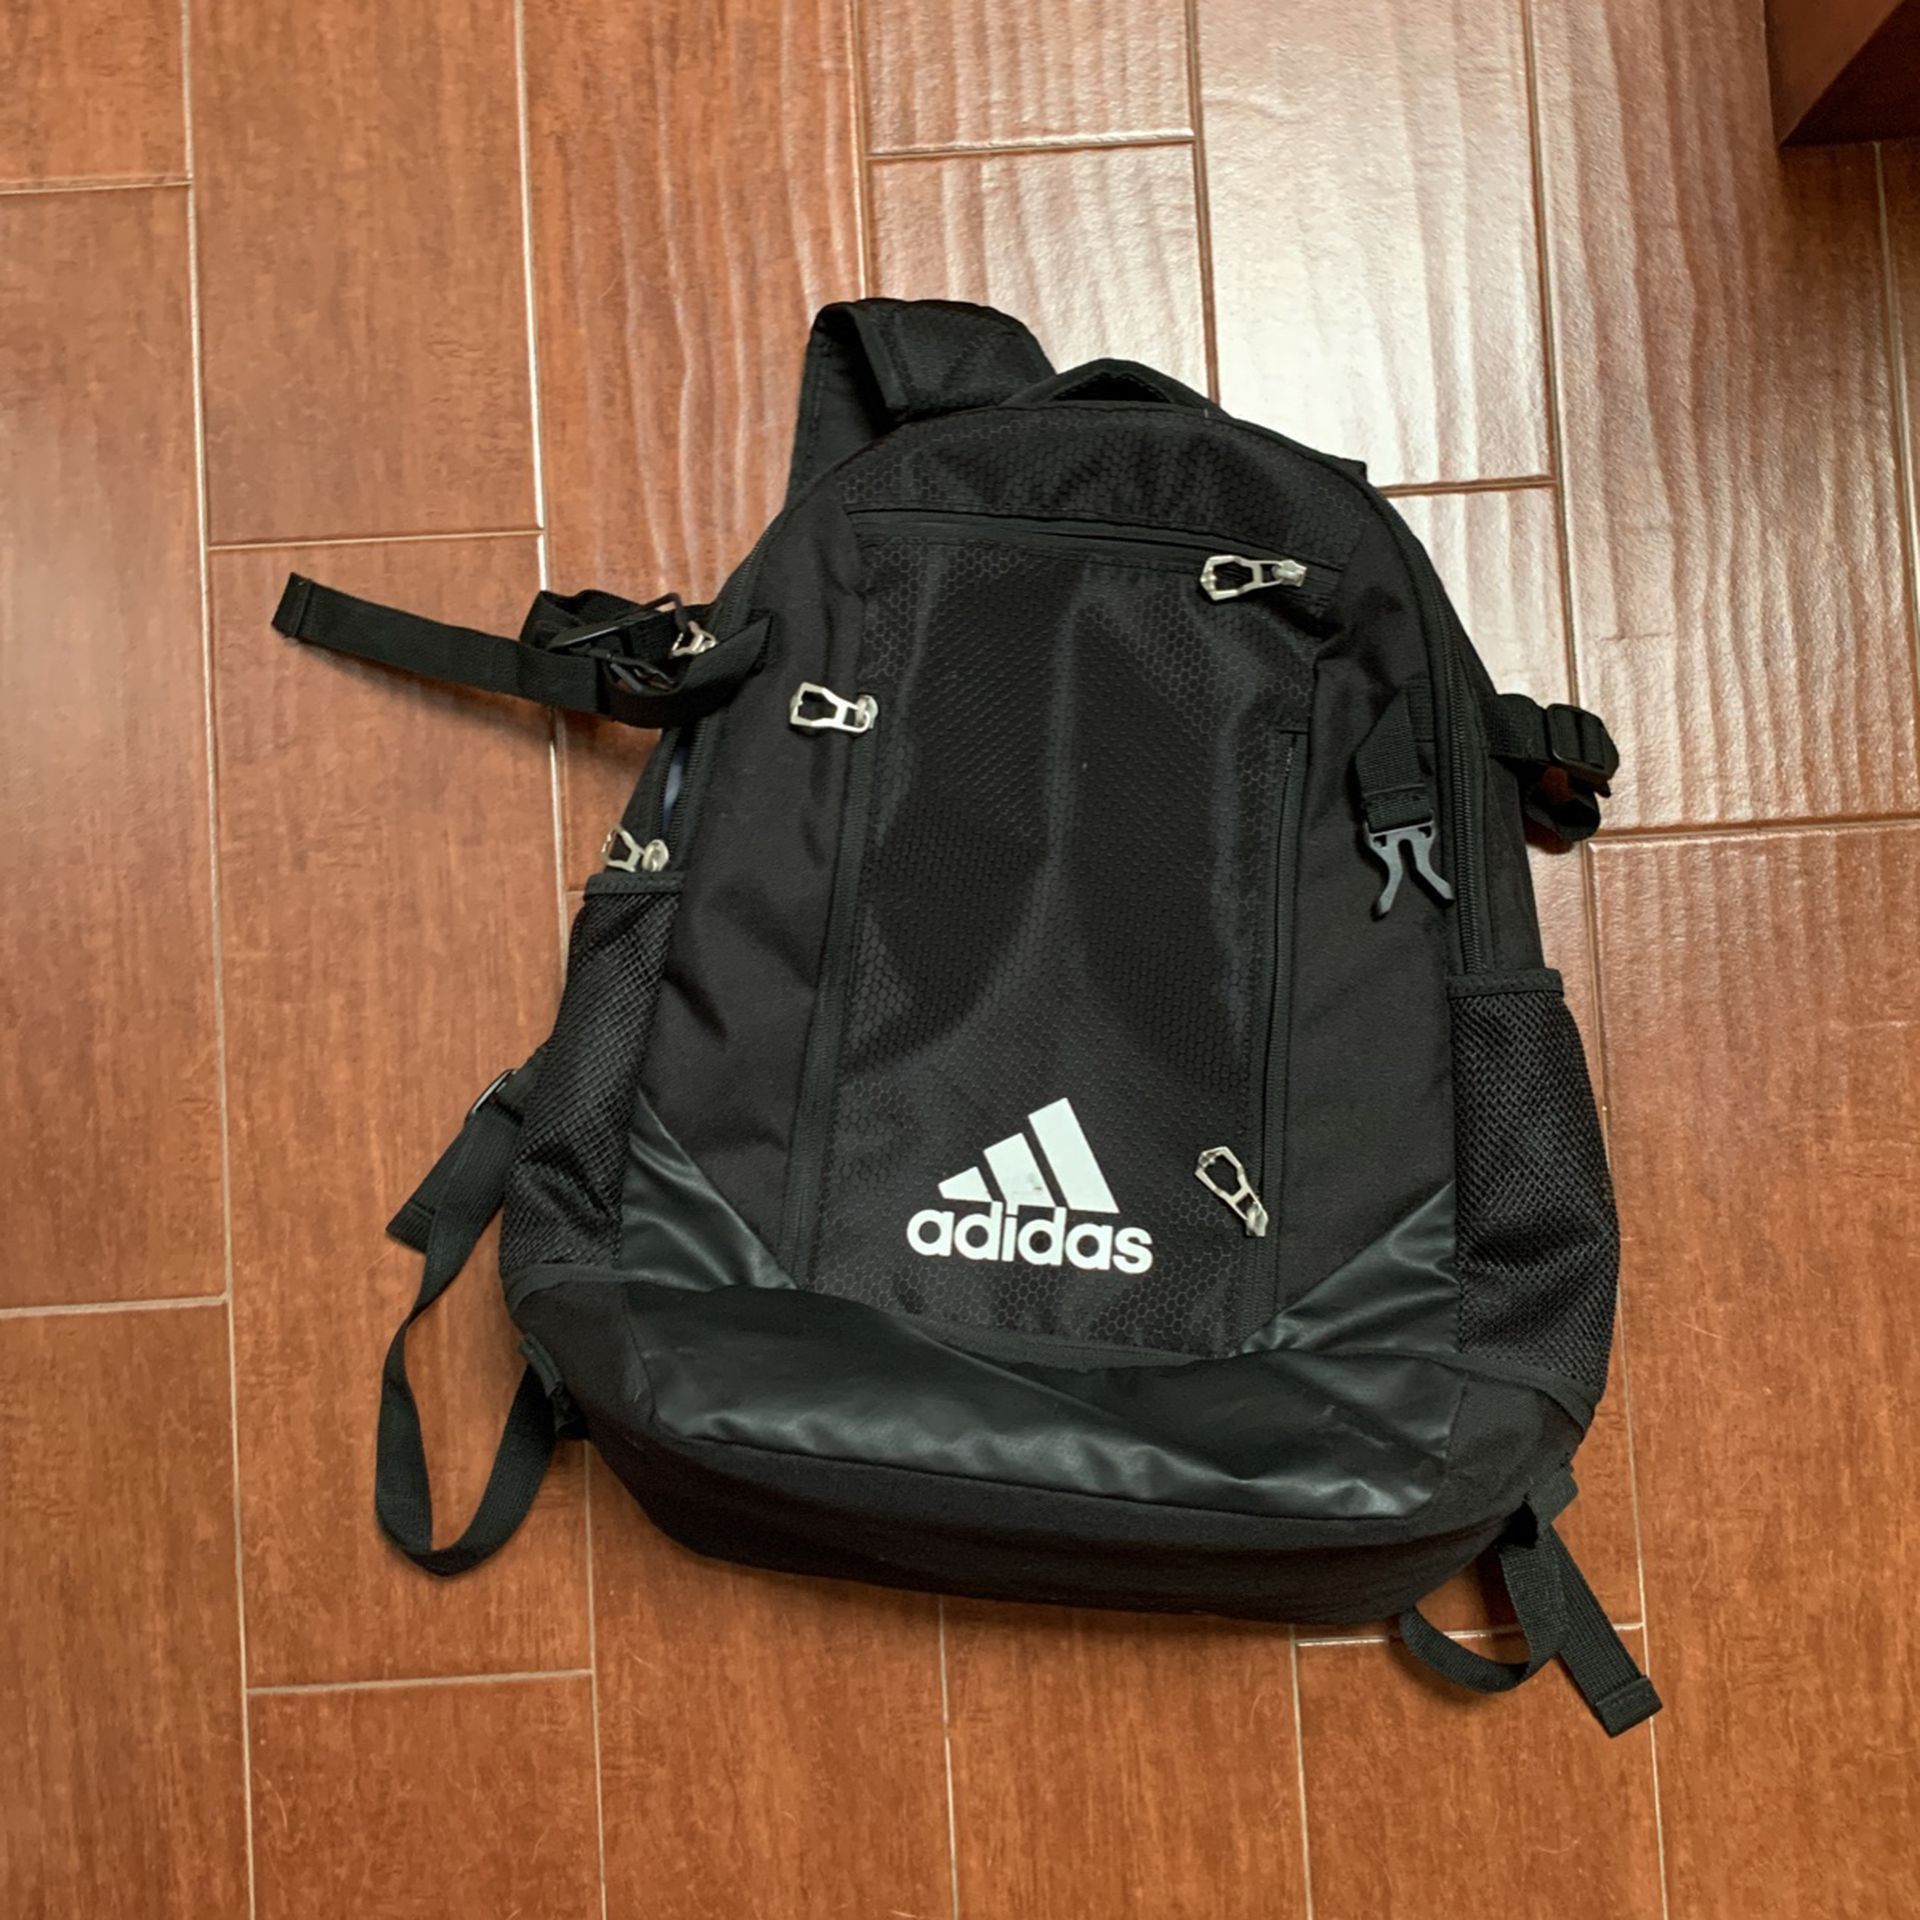 Adidas Game Day Bag